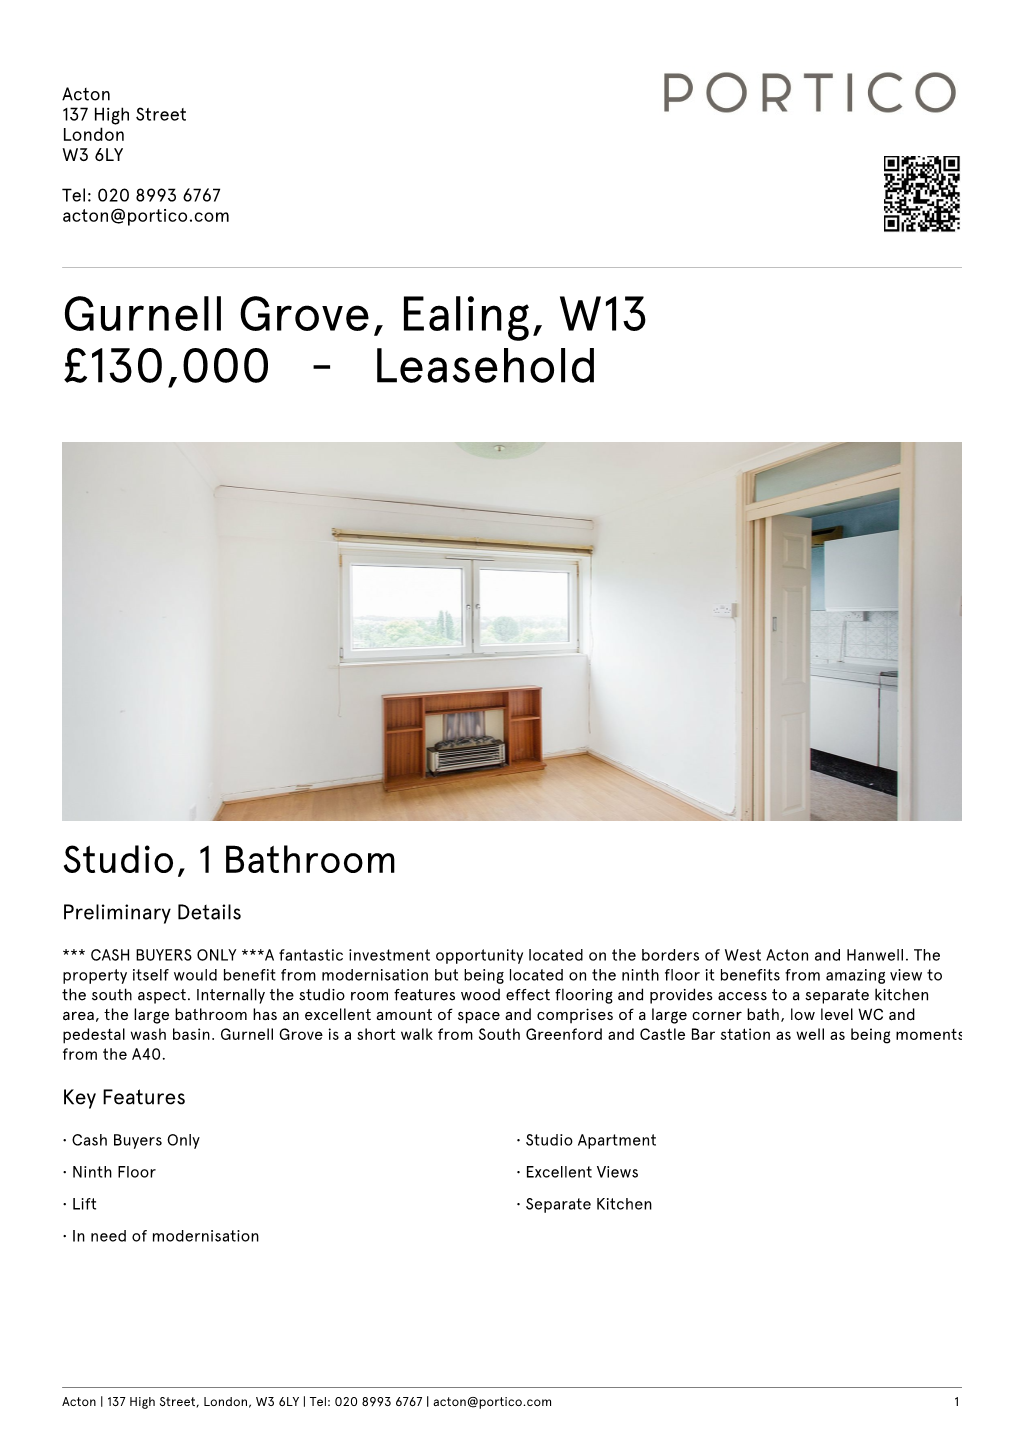 Gurnell Grove, Ealing, W13 £130000